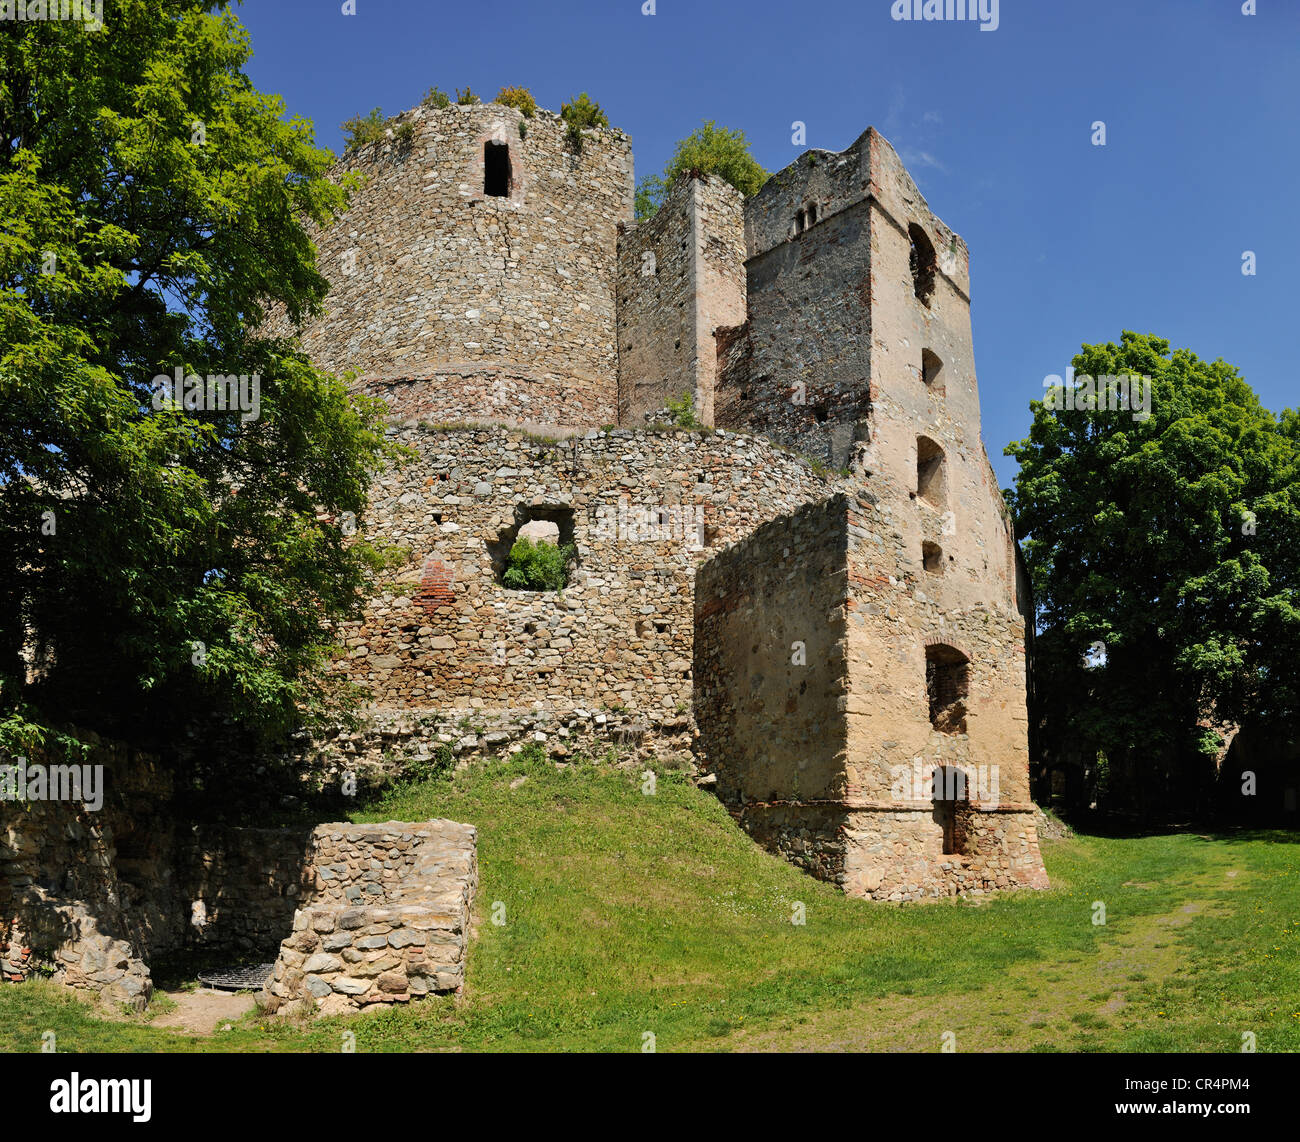 Landsee castle ruins, Burgenland, Austria, Europe Stock Photo